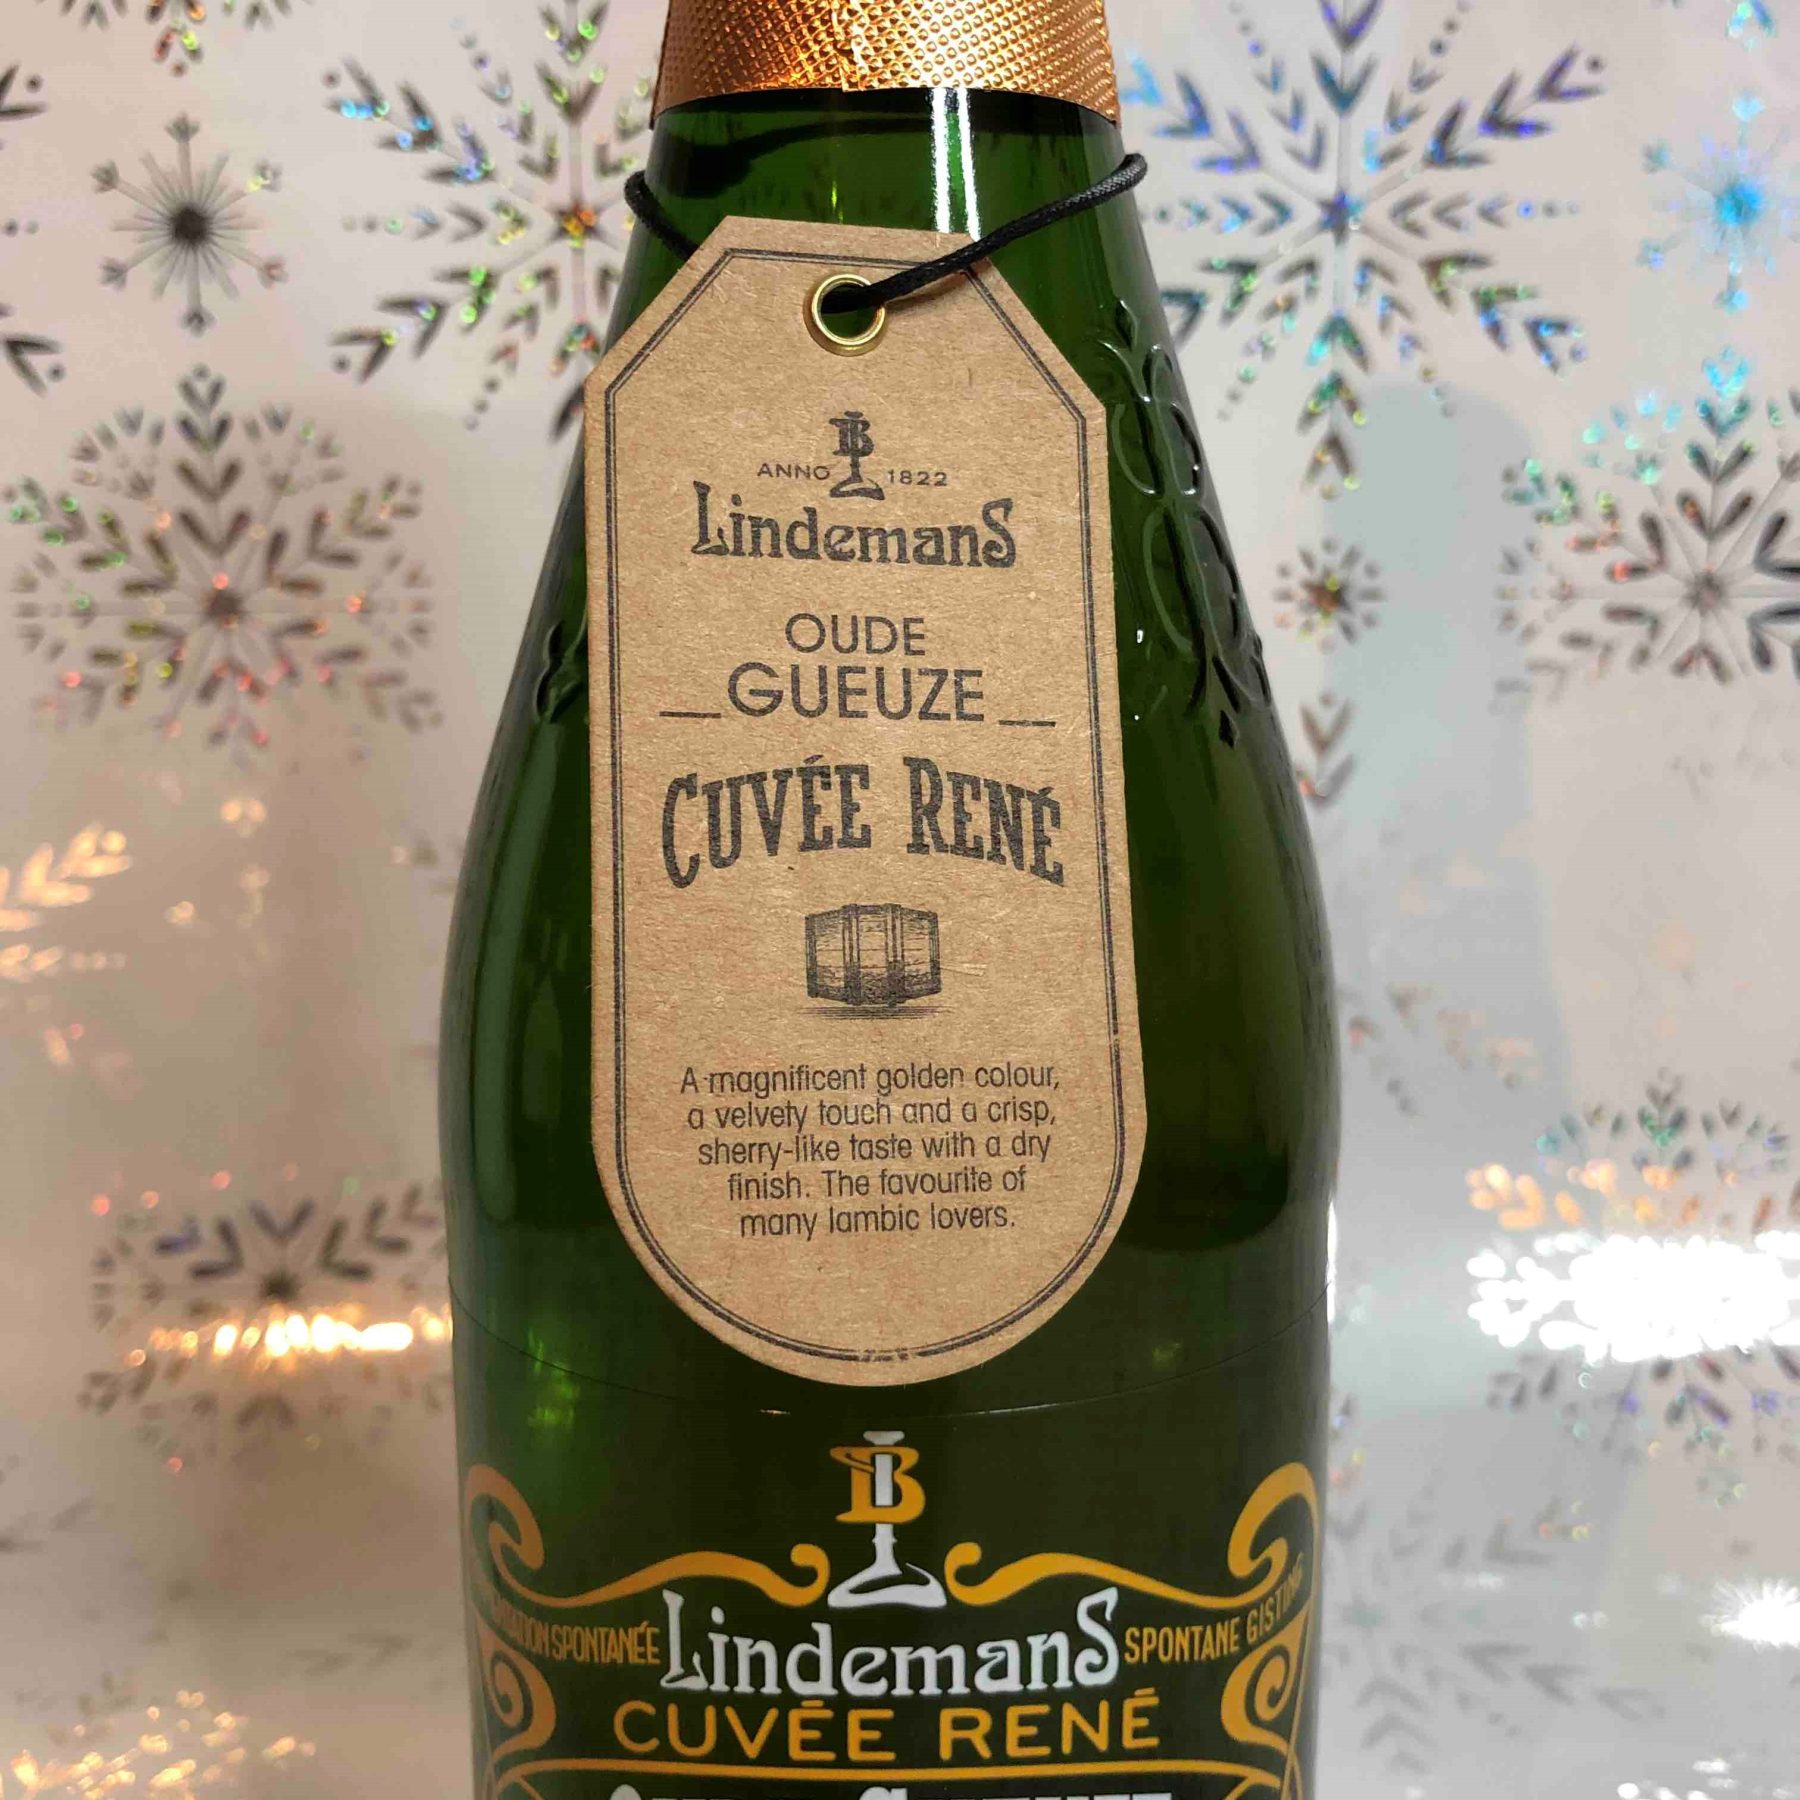 Lindemans Oude Gueuze, cuvee Rene, 750ml/bottle